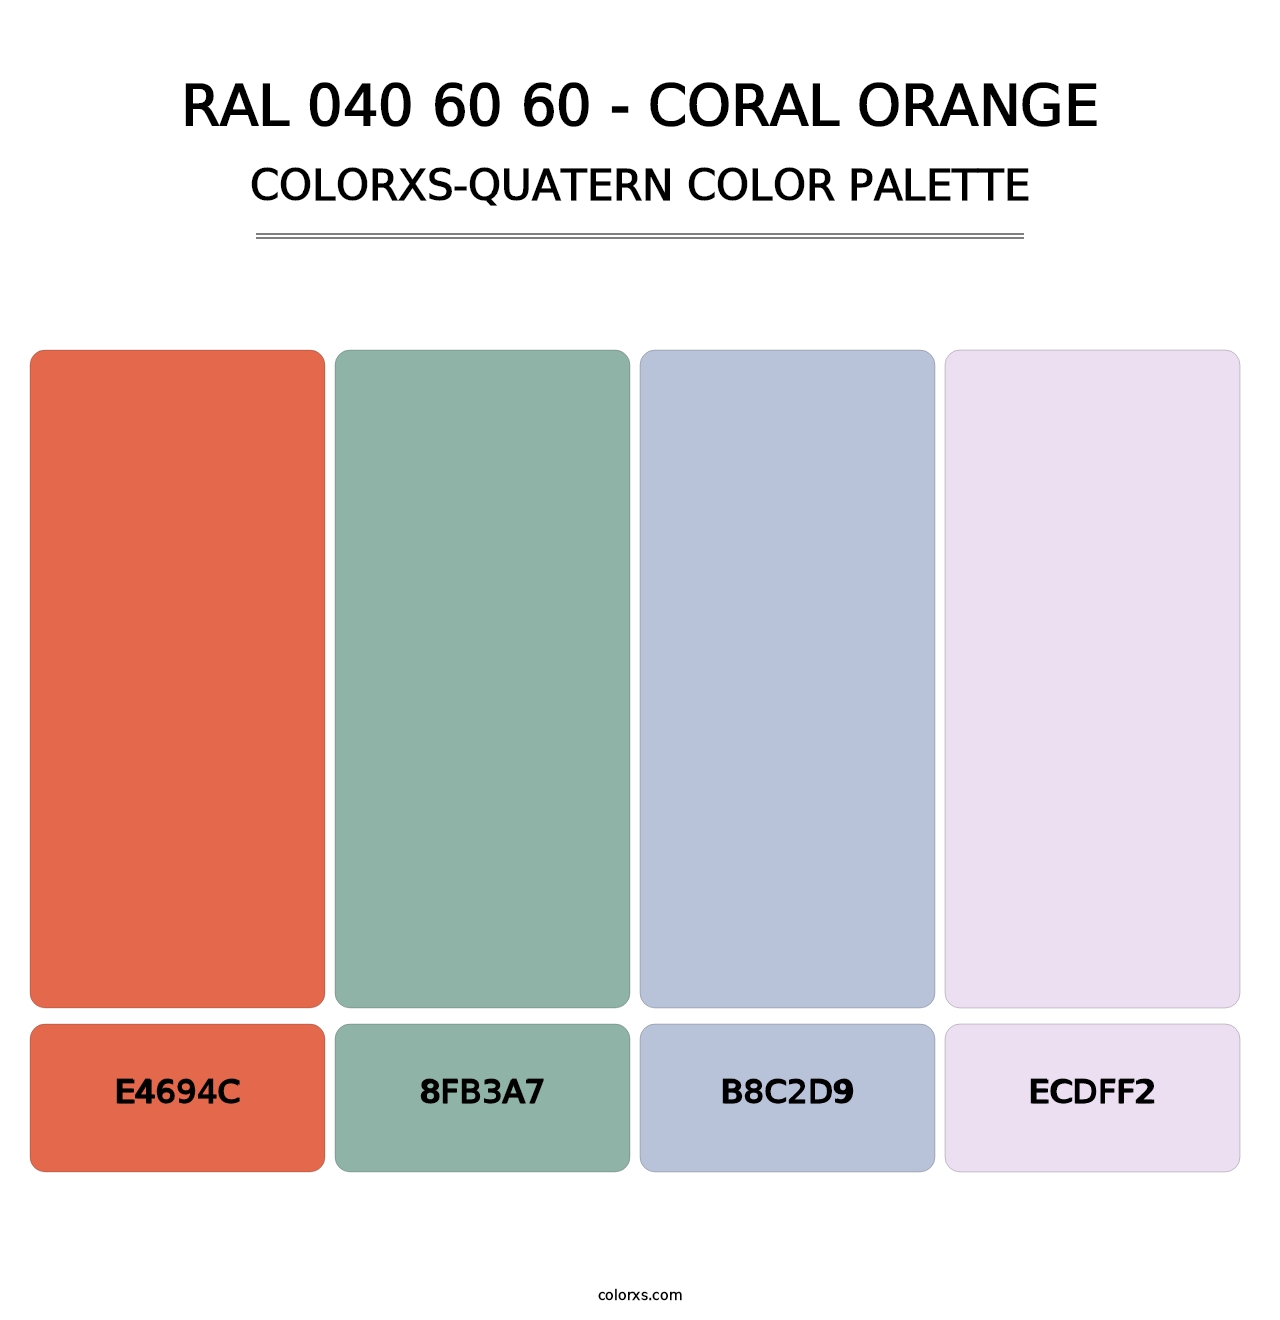 RAL 040 60 60 - Coral Orange - Colorxs Quatern Palette